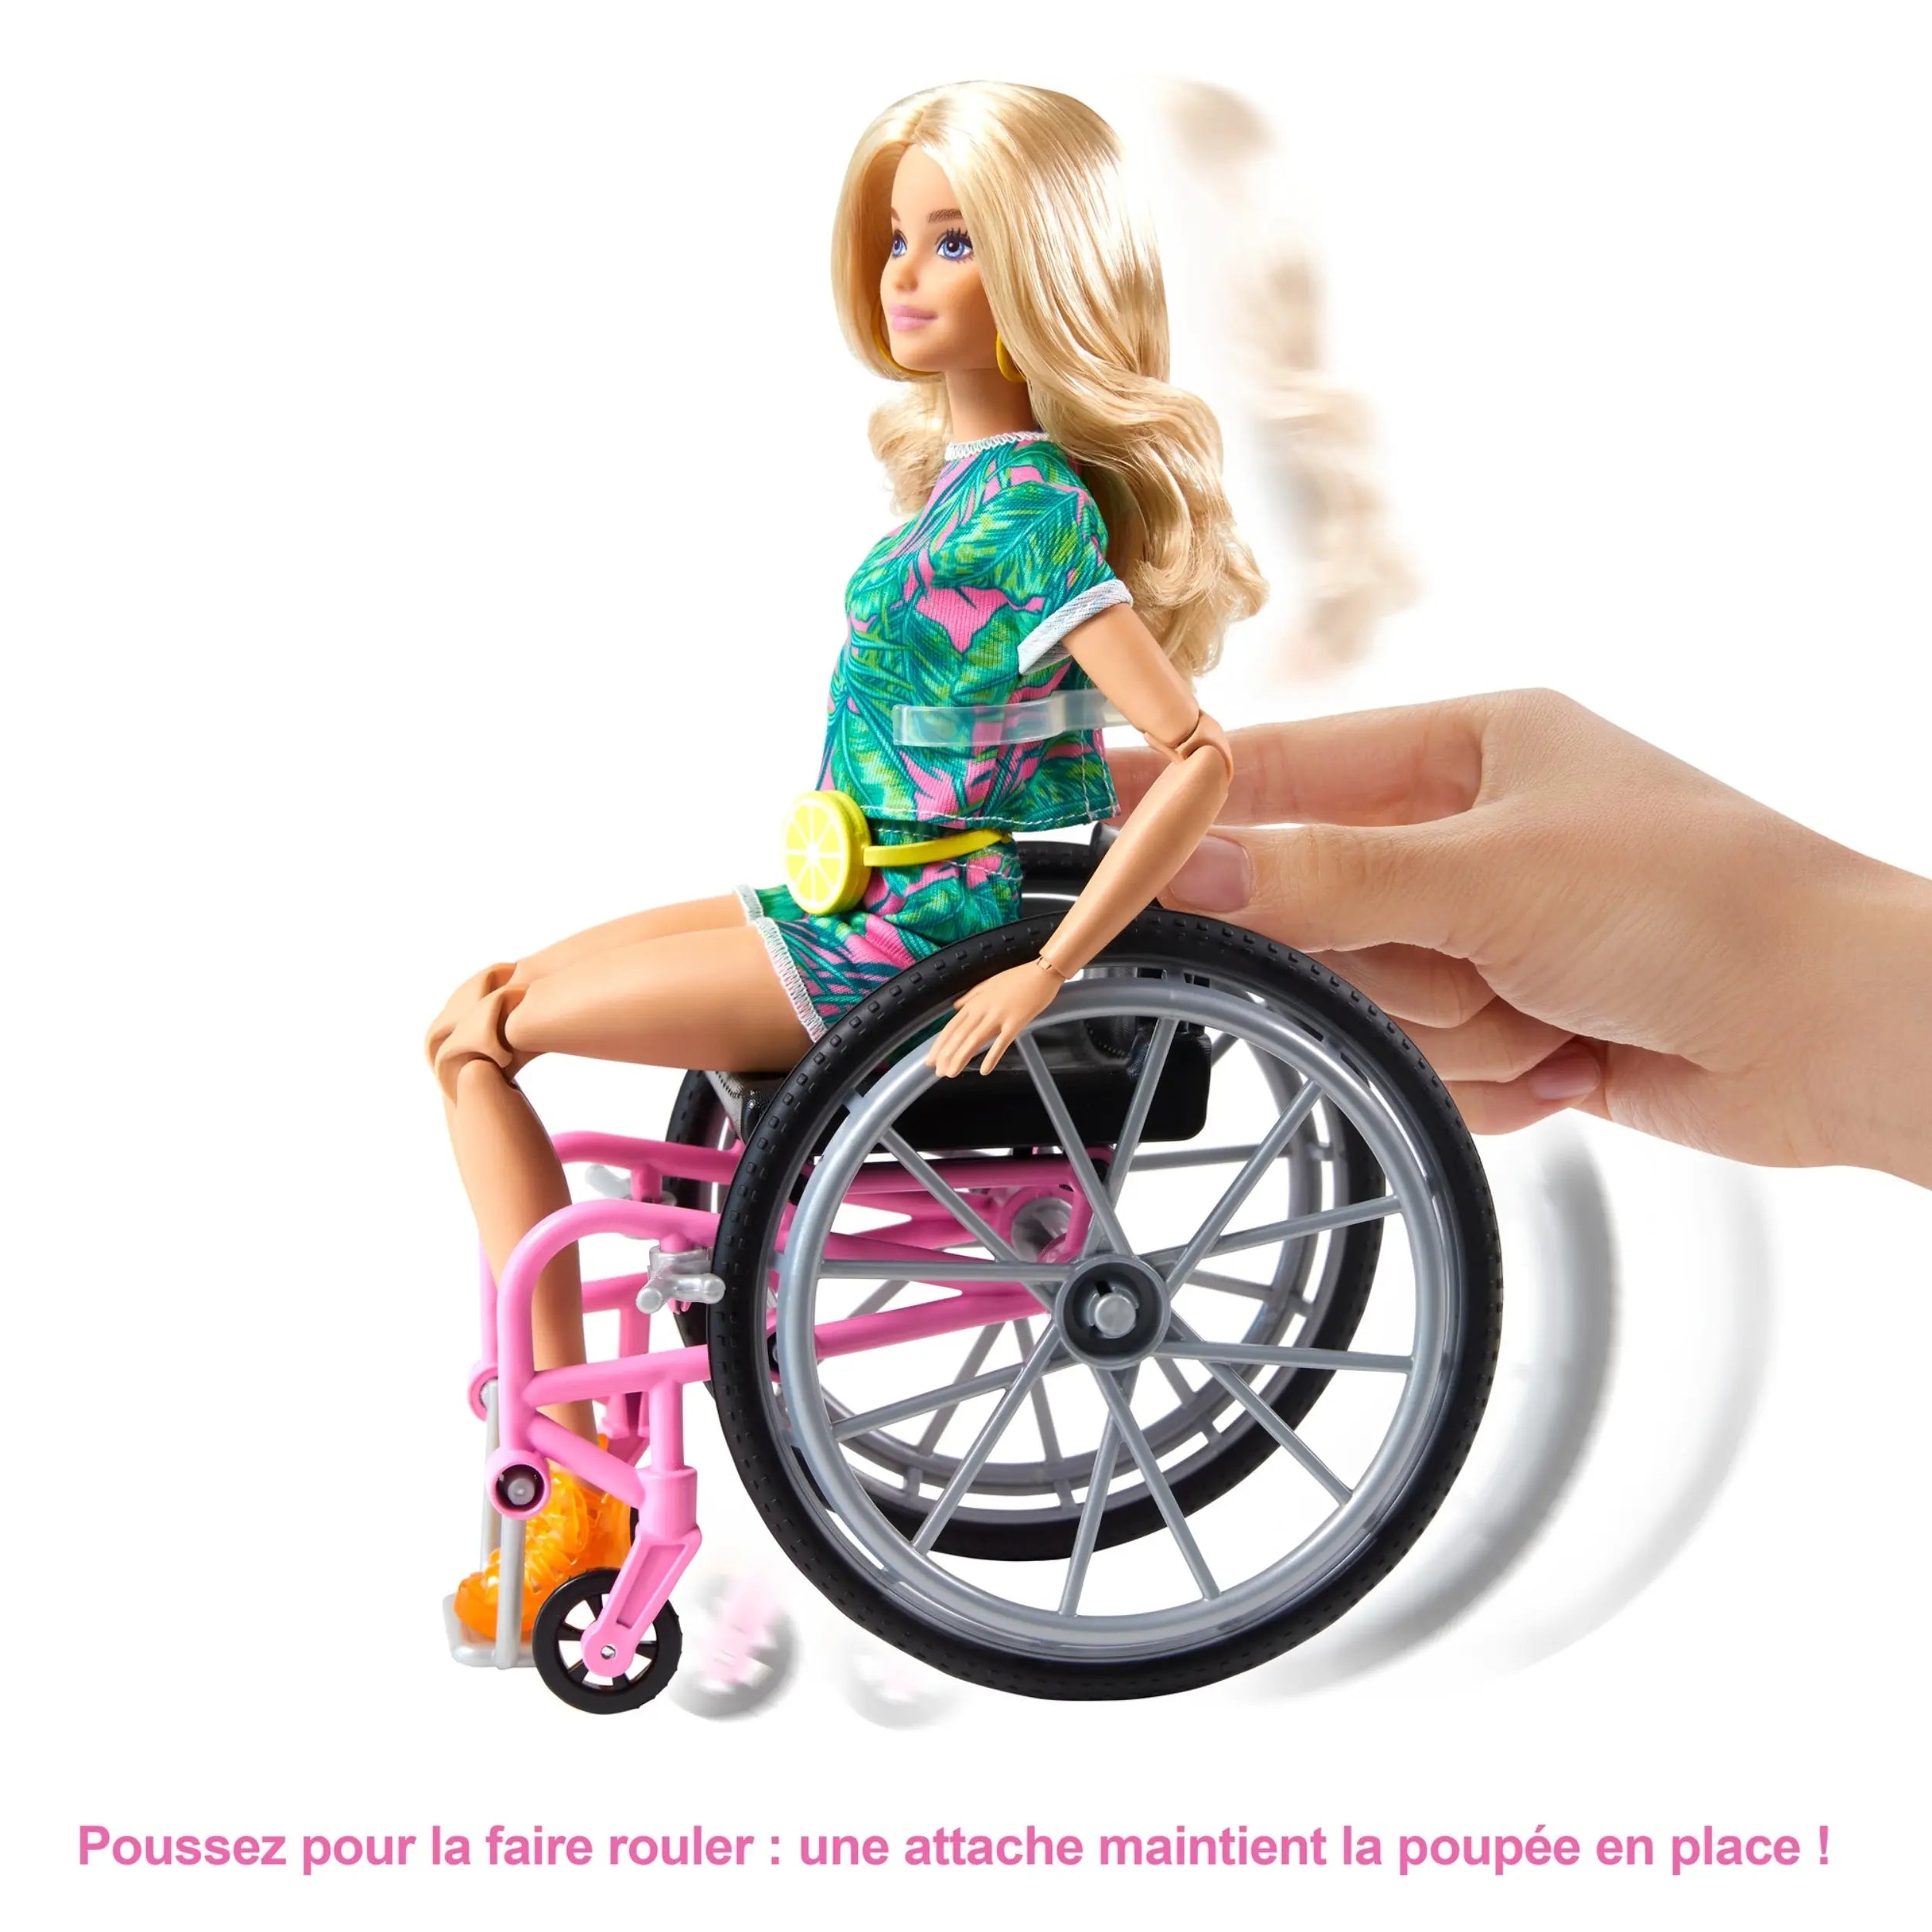 Mattel - Barbie Fashionistas Doll And Accessory GRB93